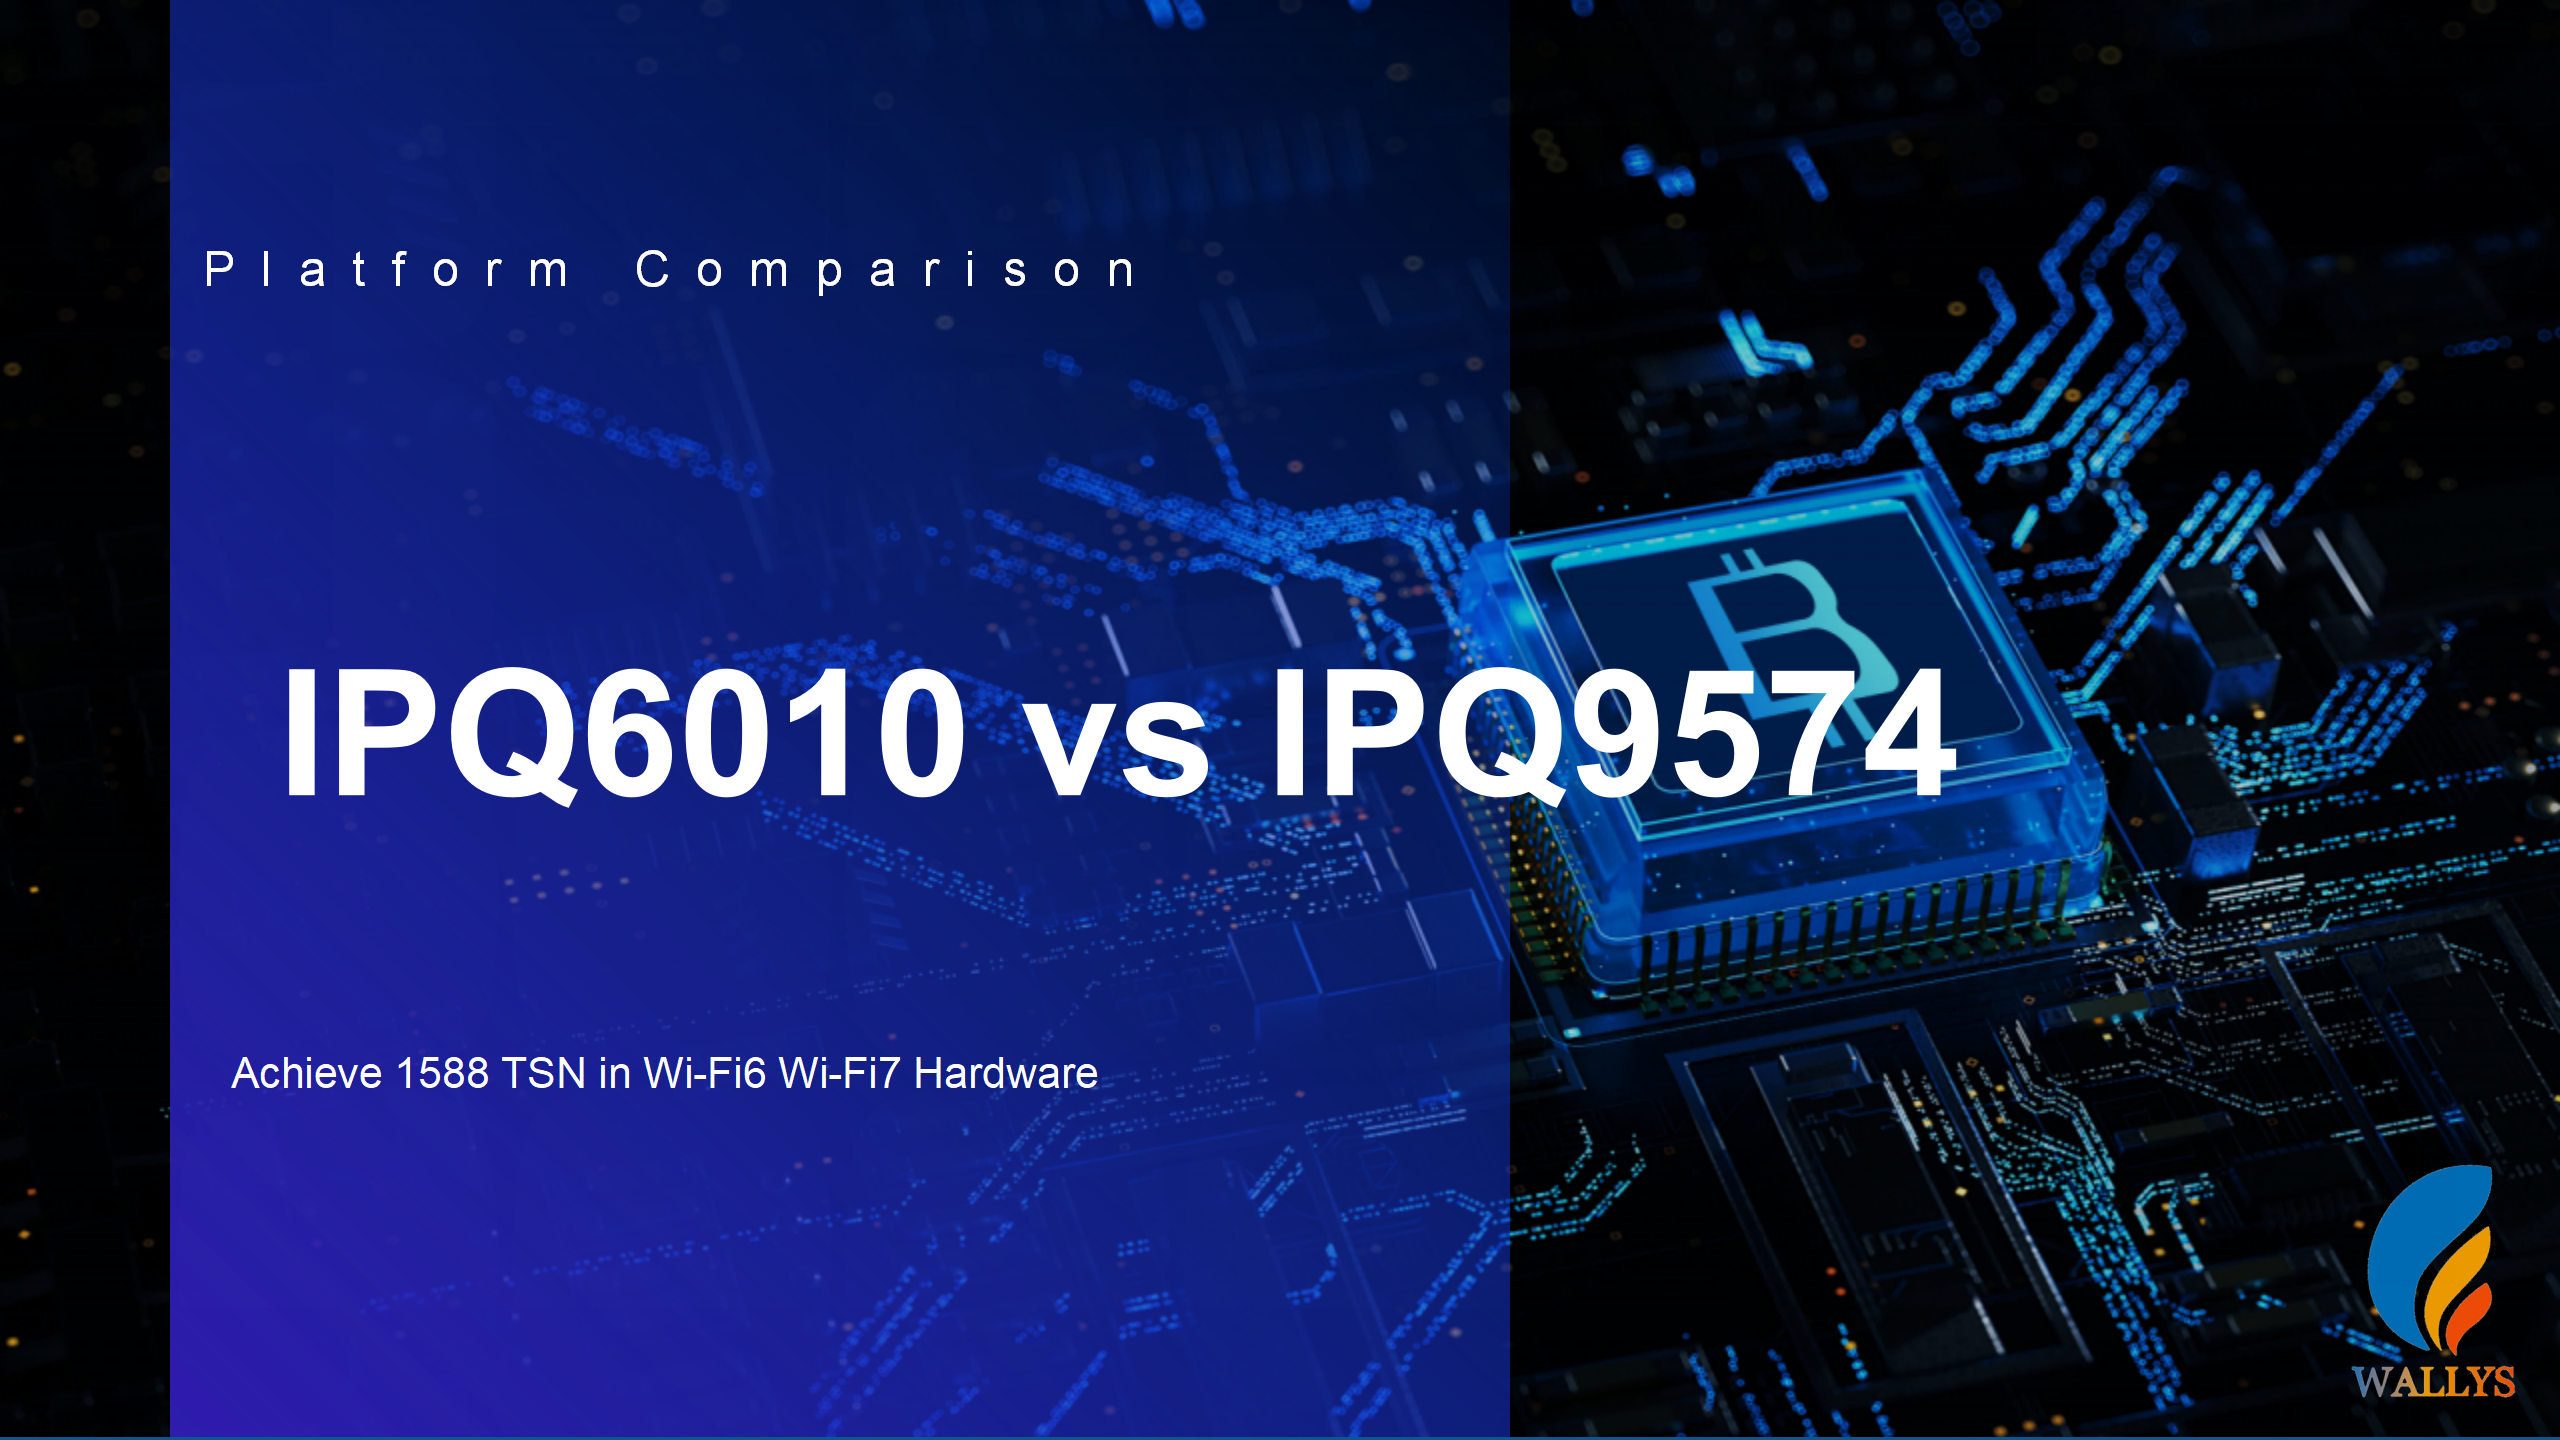 IPQ6010 vs IPQ9574 Platform Comparison|Achieve 1588 TSN in WiFi6 WiFi7Hardware